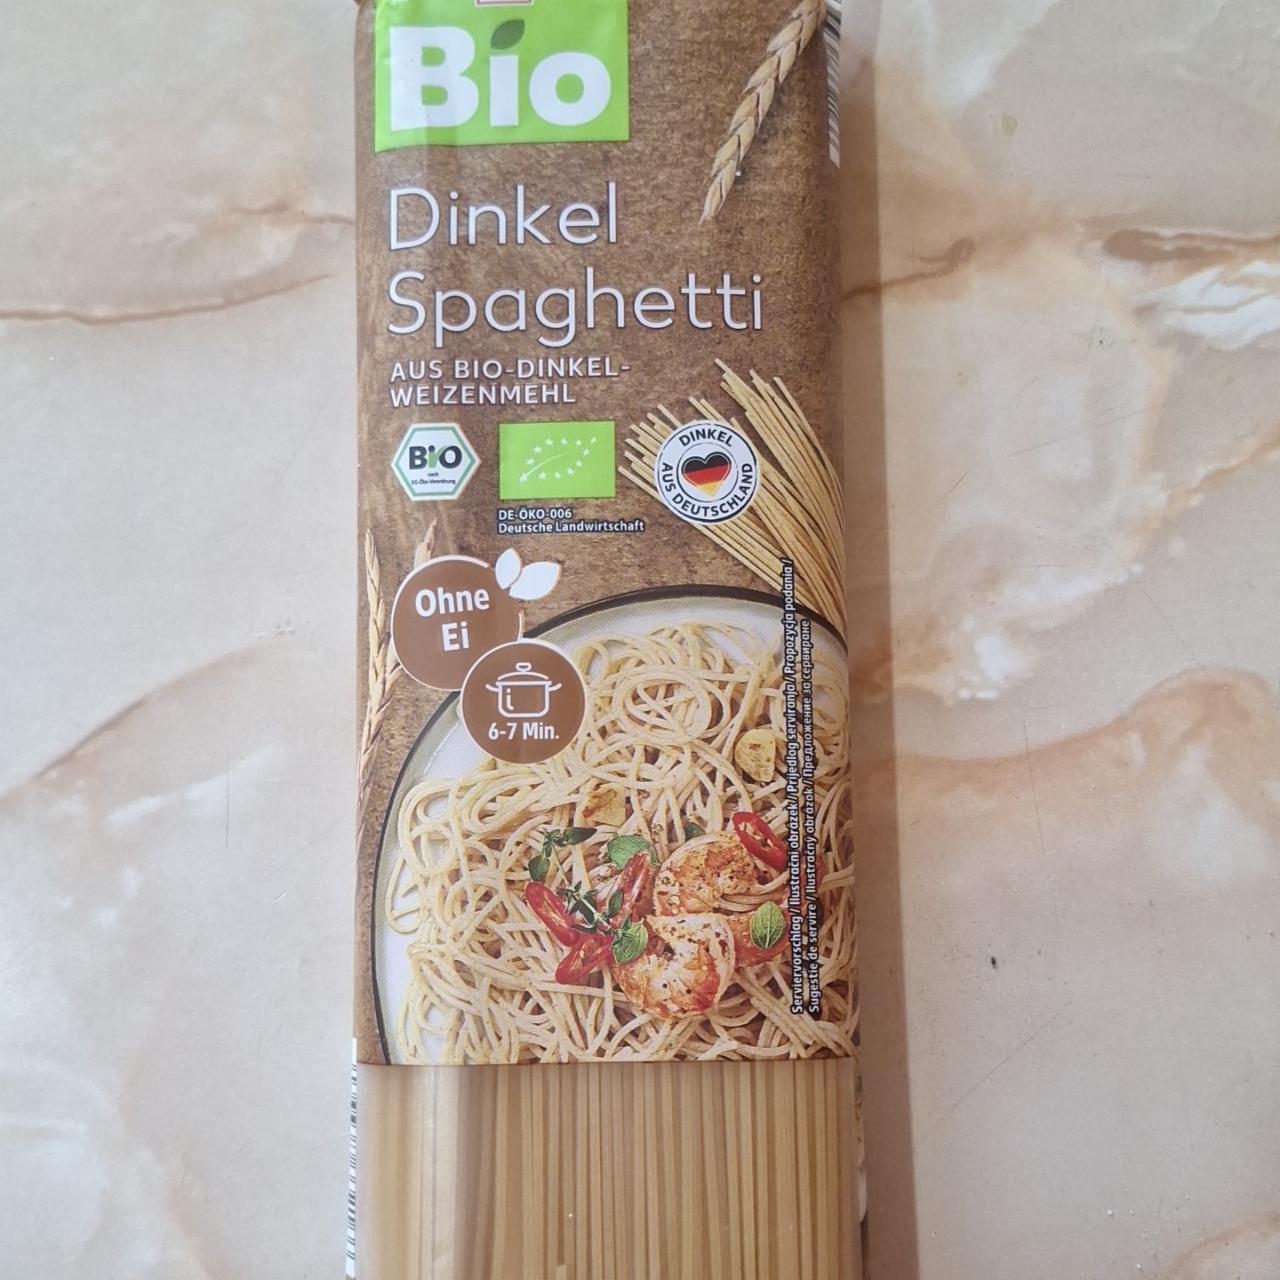 Képek - Bio Dinkel Spaghetti K-Bio